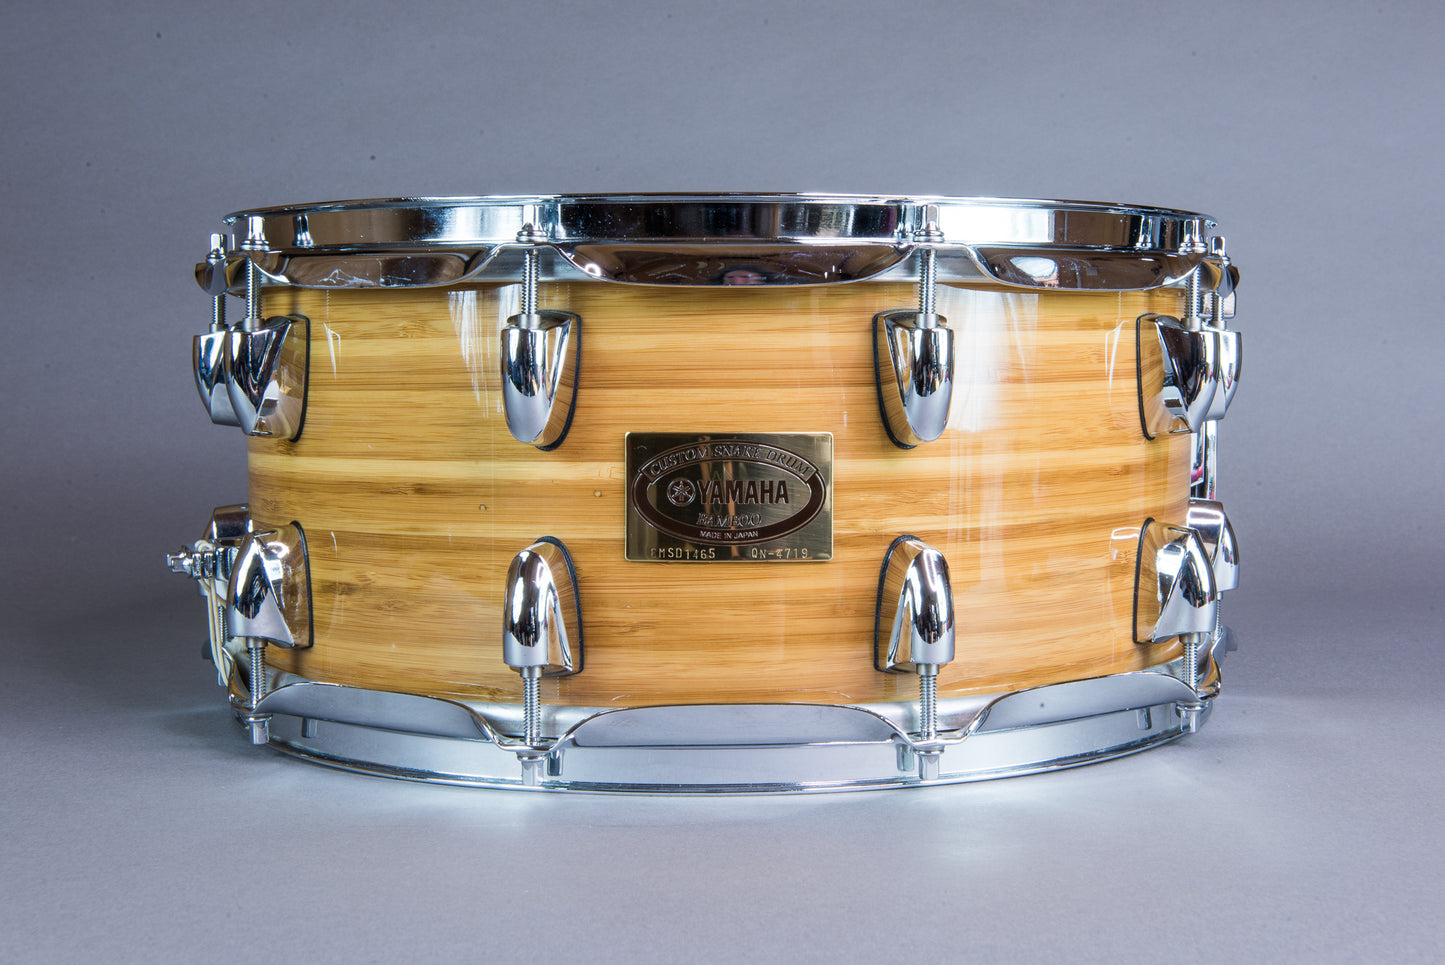 Yamaha 14" x 6.5" Custom Bamboo Snare Drum